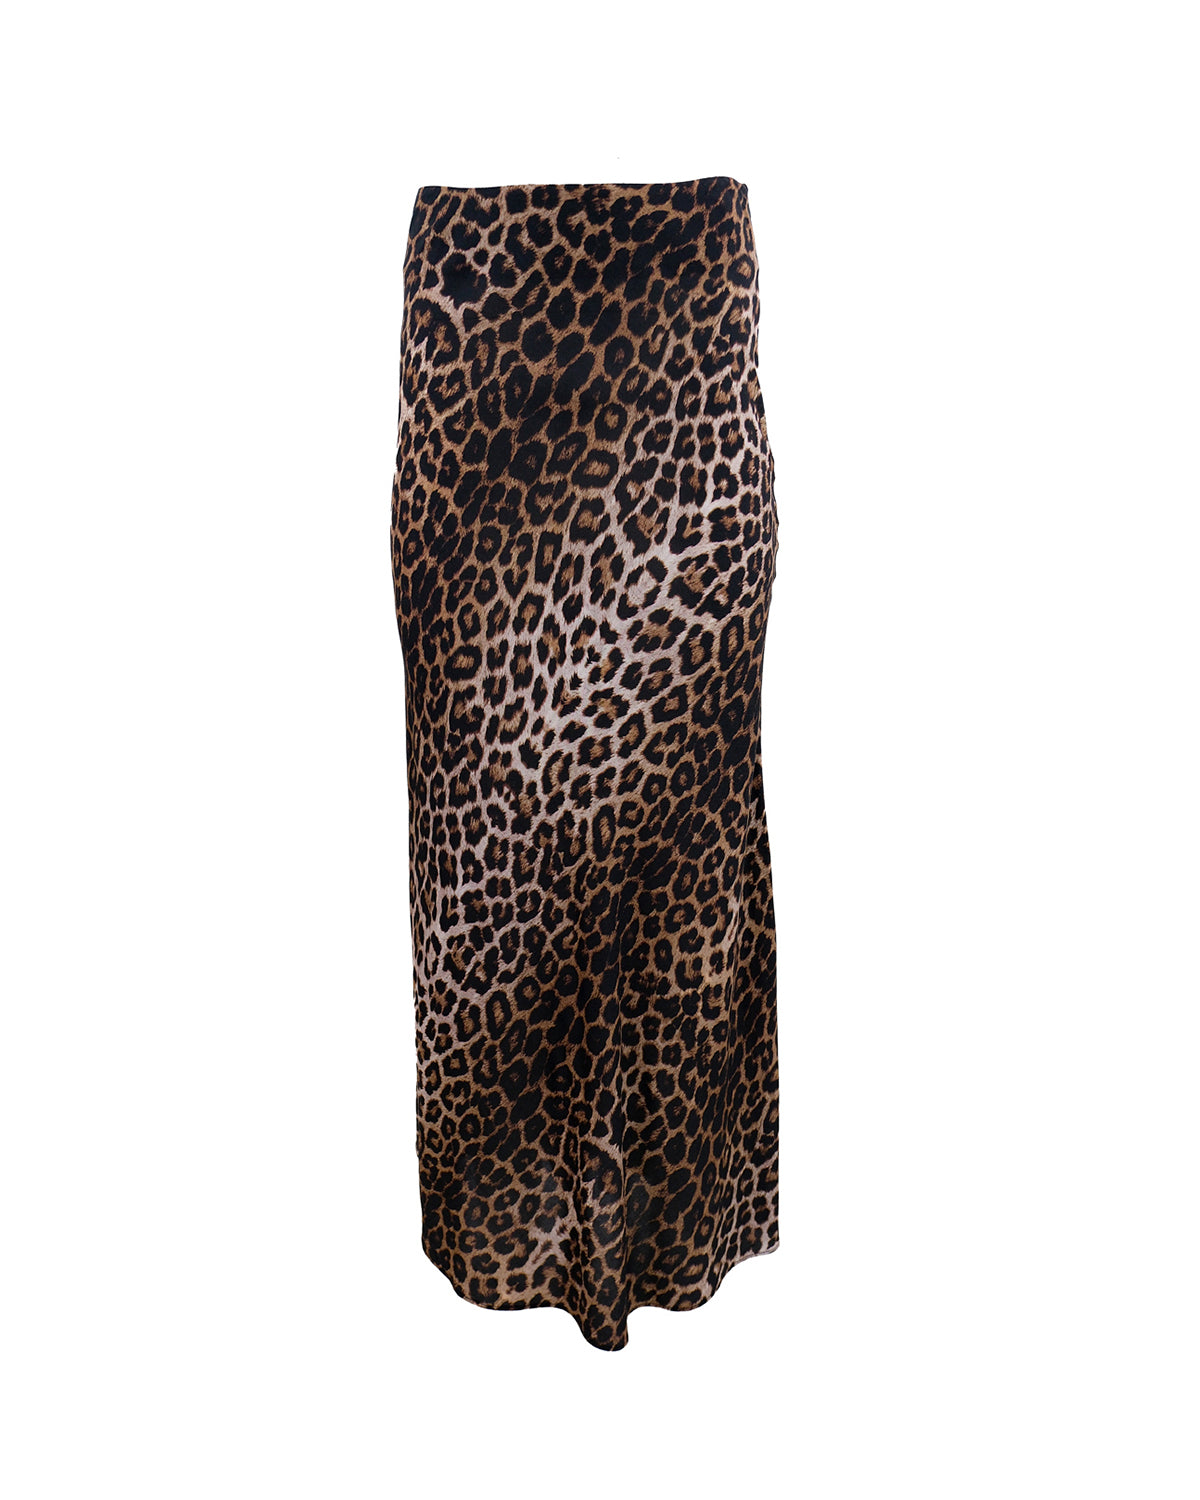 Kores Leopard Skirt